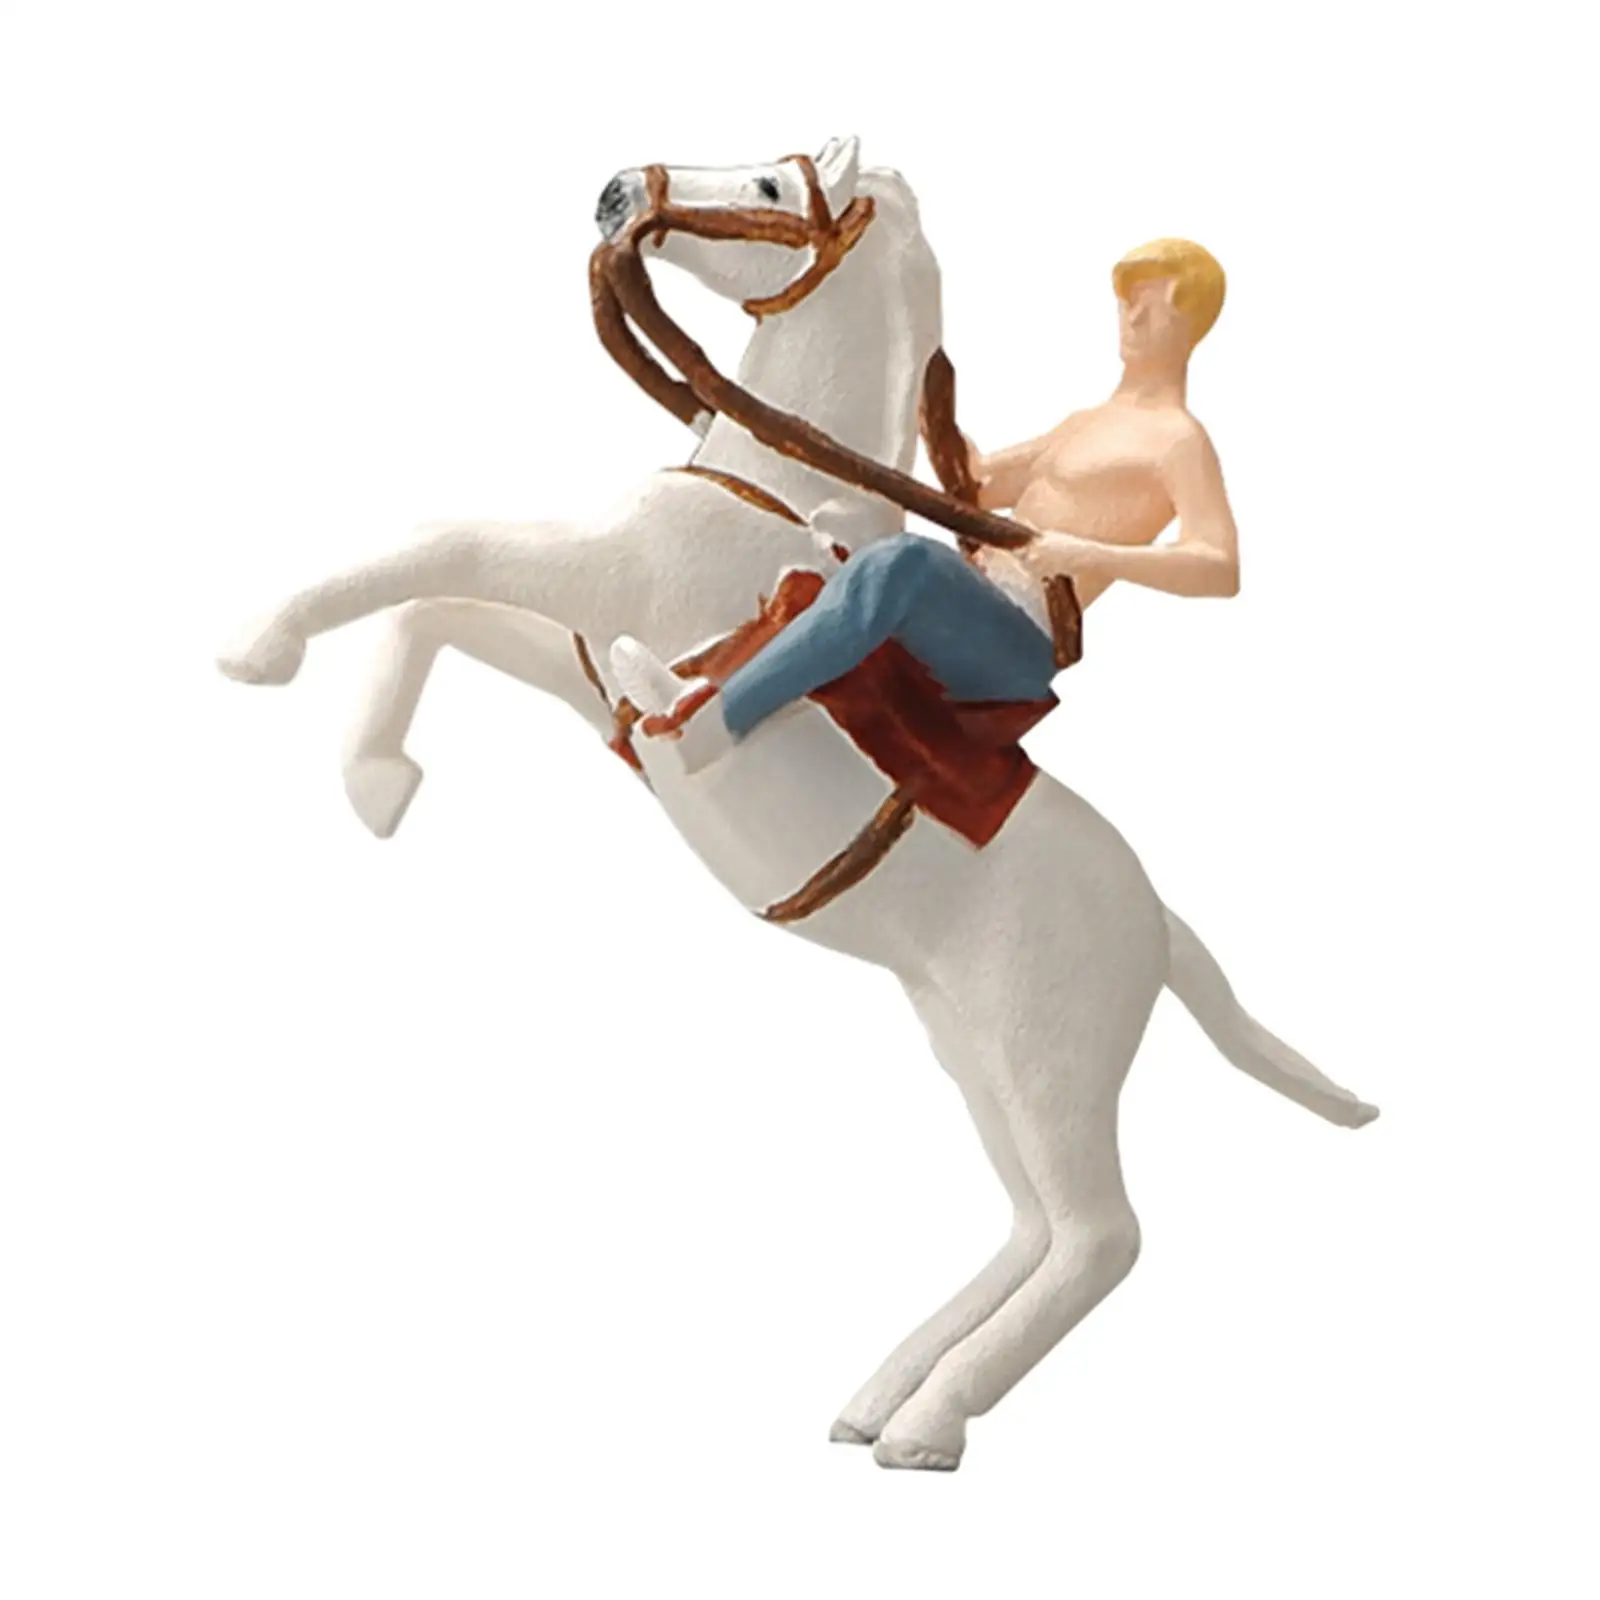 Diorama Scenery Figures 1:64 Scale Male on Horseback Simulation Tiny 1/64 People Model for Dollhouse Decor Desktop Ornament